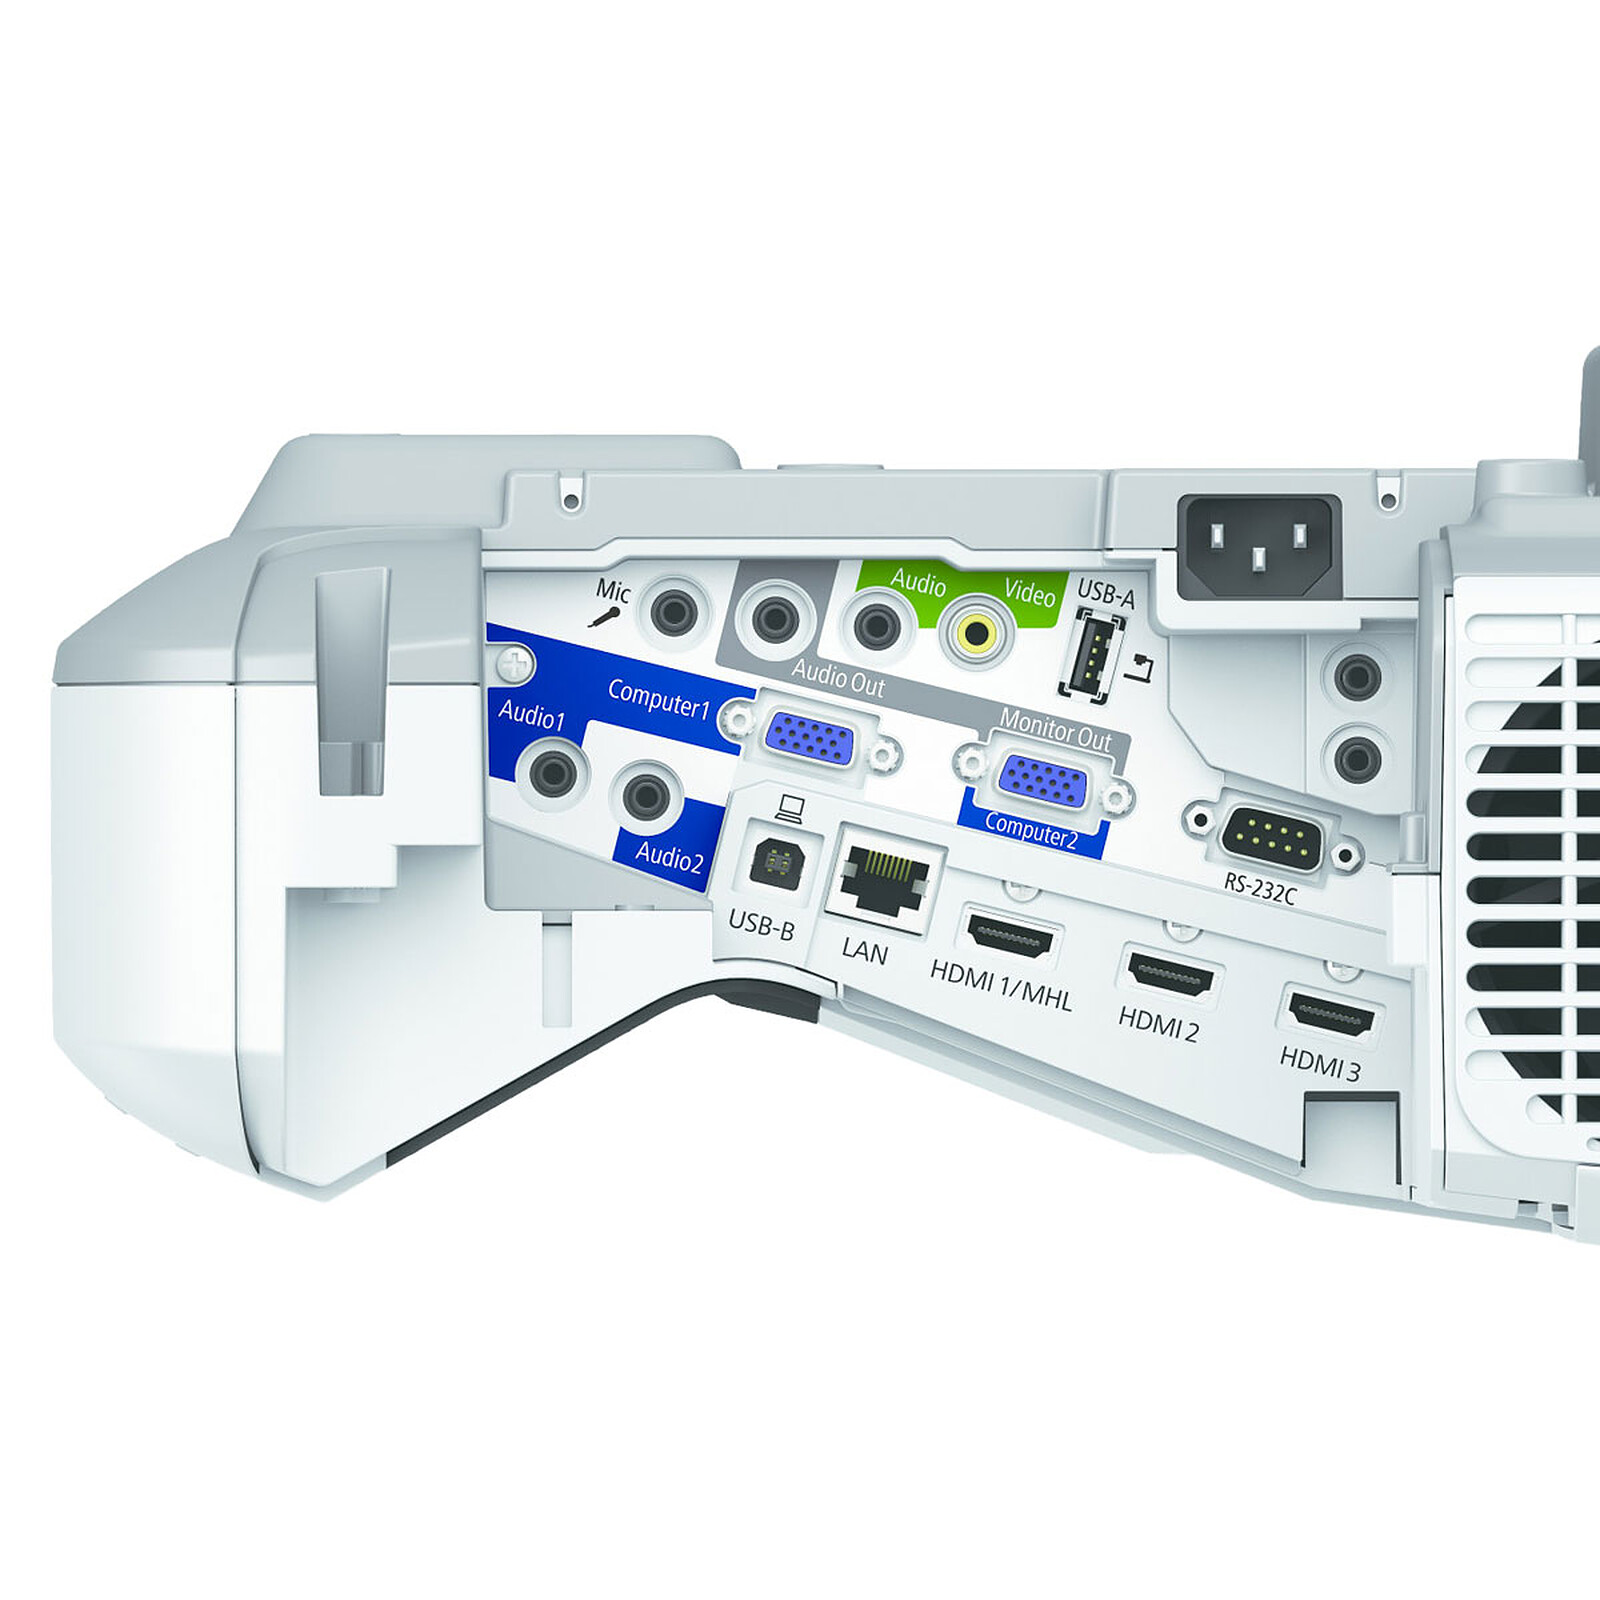 Epson - Eb-685wi Proyector Para Montar En Pared 3500lúmenes Ansi 3lcd Wxga  (1280x800) Gris, Color Blanco Videoproye con Ofertas en Carrefour